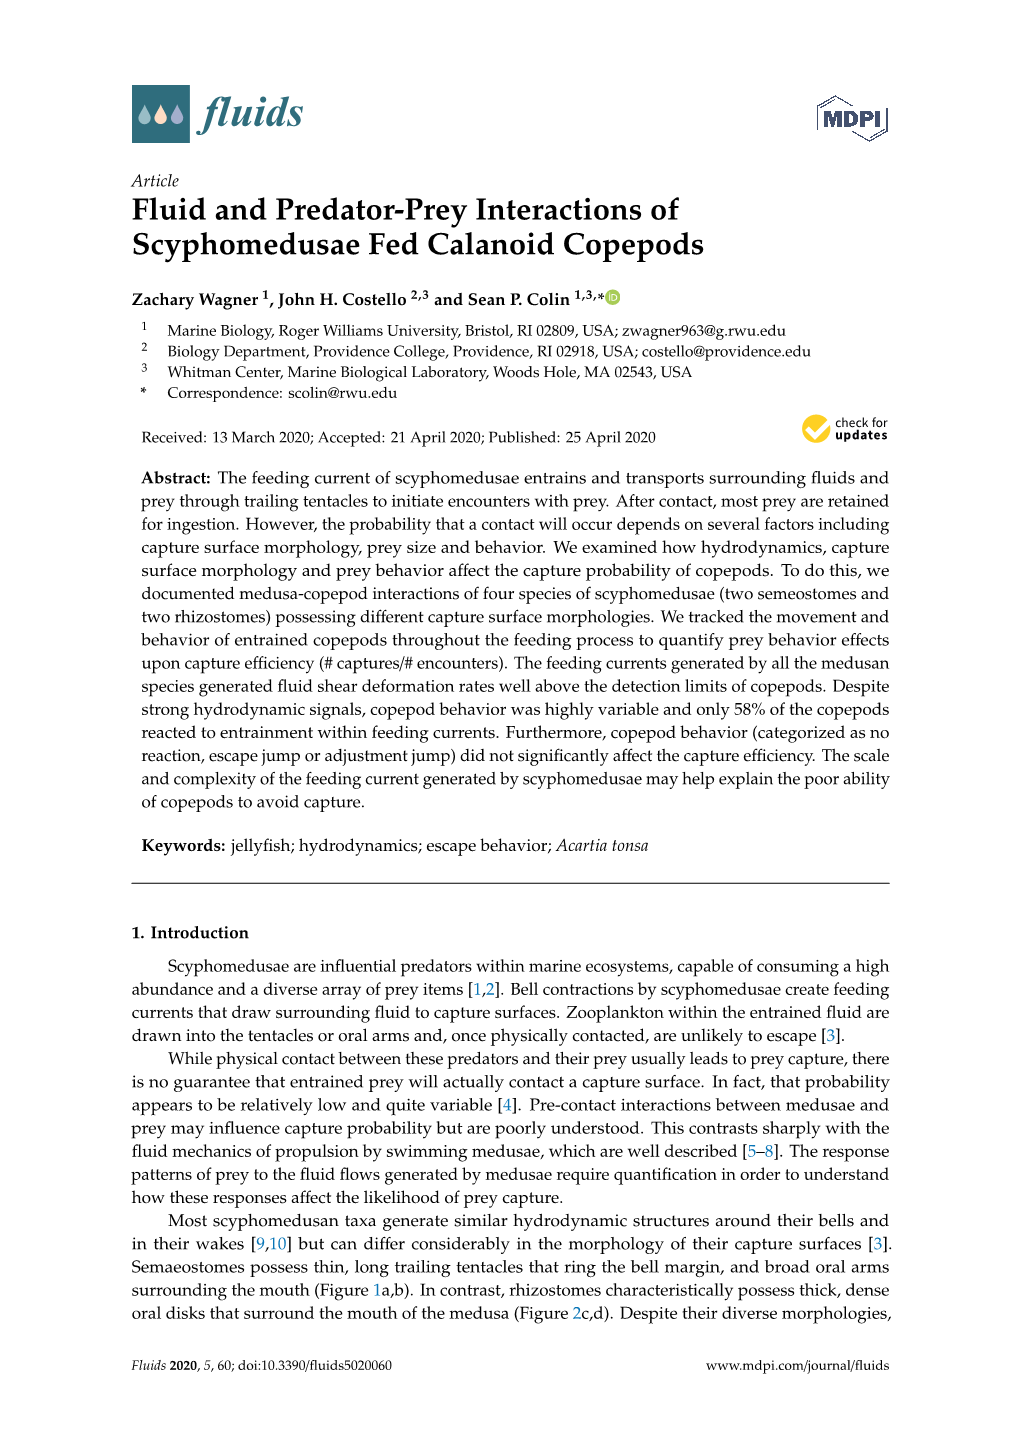 Fluid and Predator-Prey Interactions of Scyphomedusae Fed Calanoid Copepods